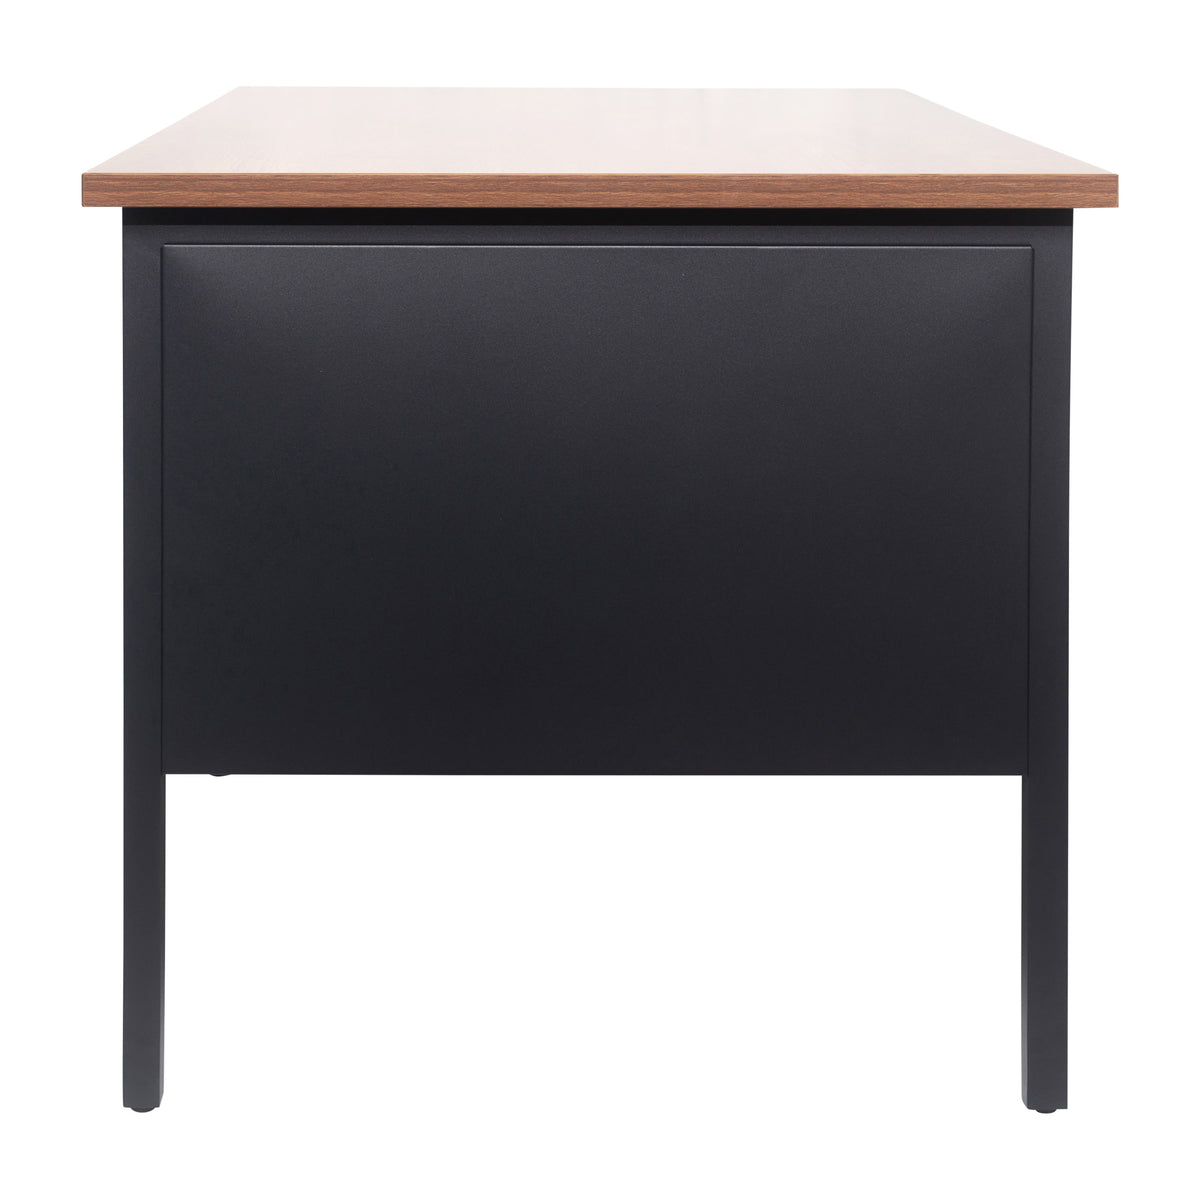 Walnut |#| Commercial Double Pedestal Desk with 5 Locking Drawers in Walnut-50x60